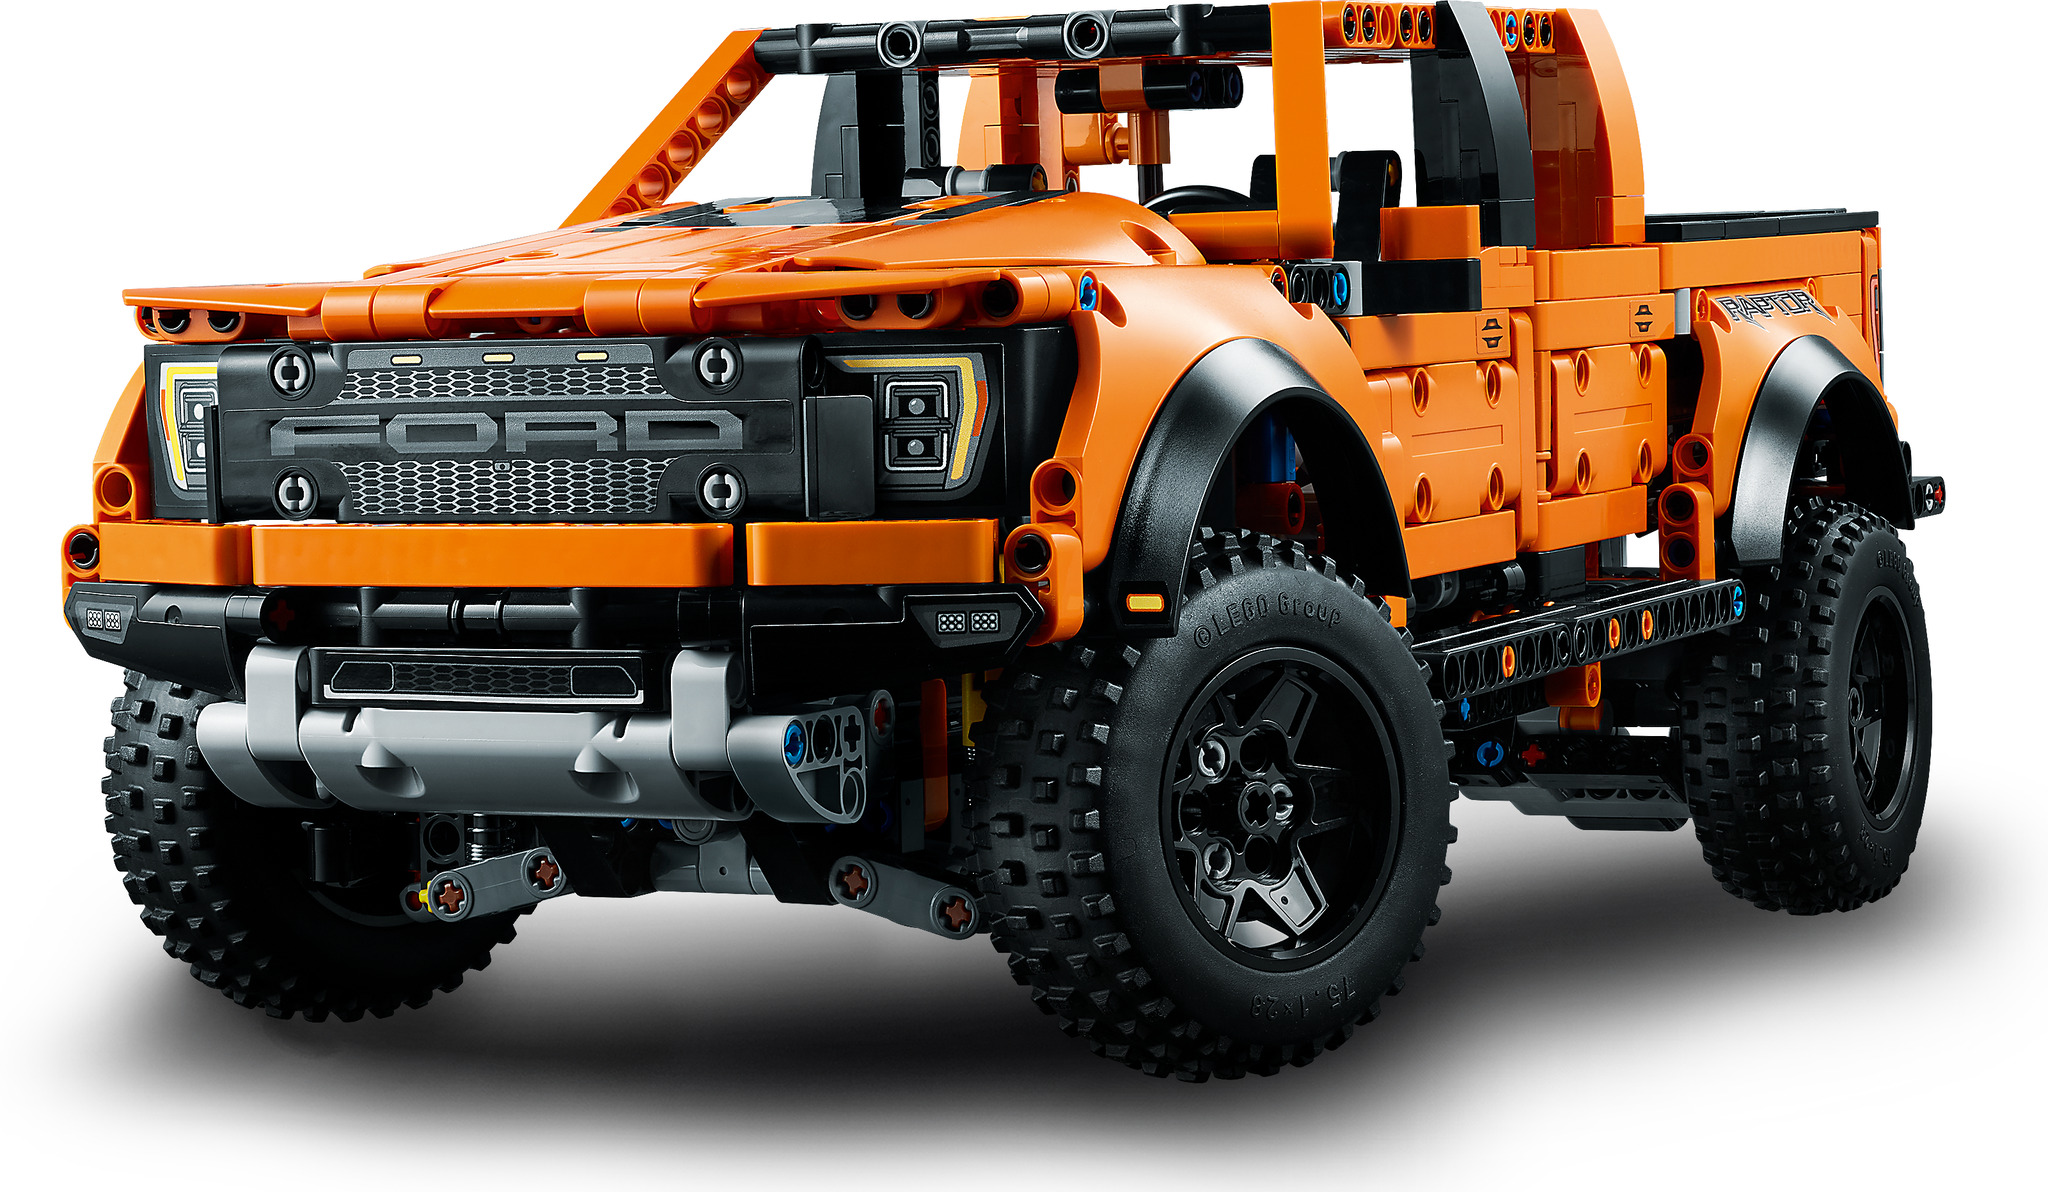 Lego 42126 technic kit ford f-150 raptor maquette de voiture a